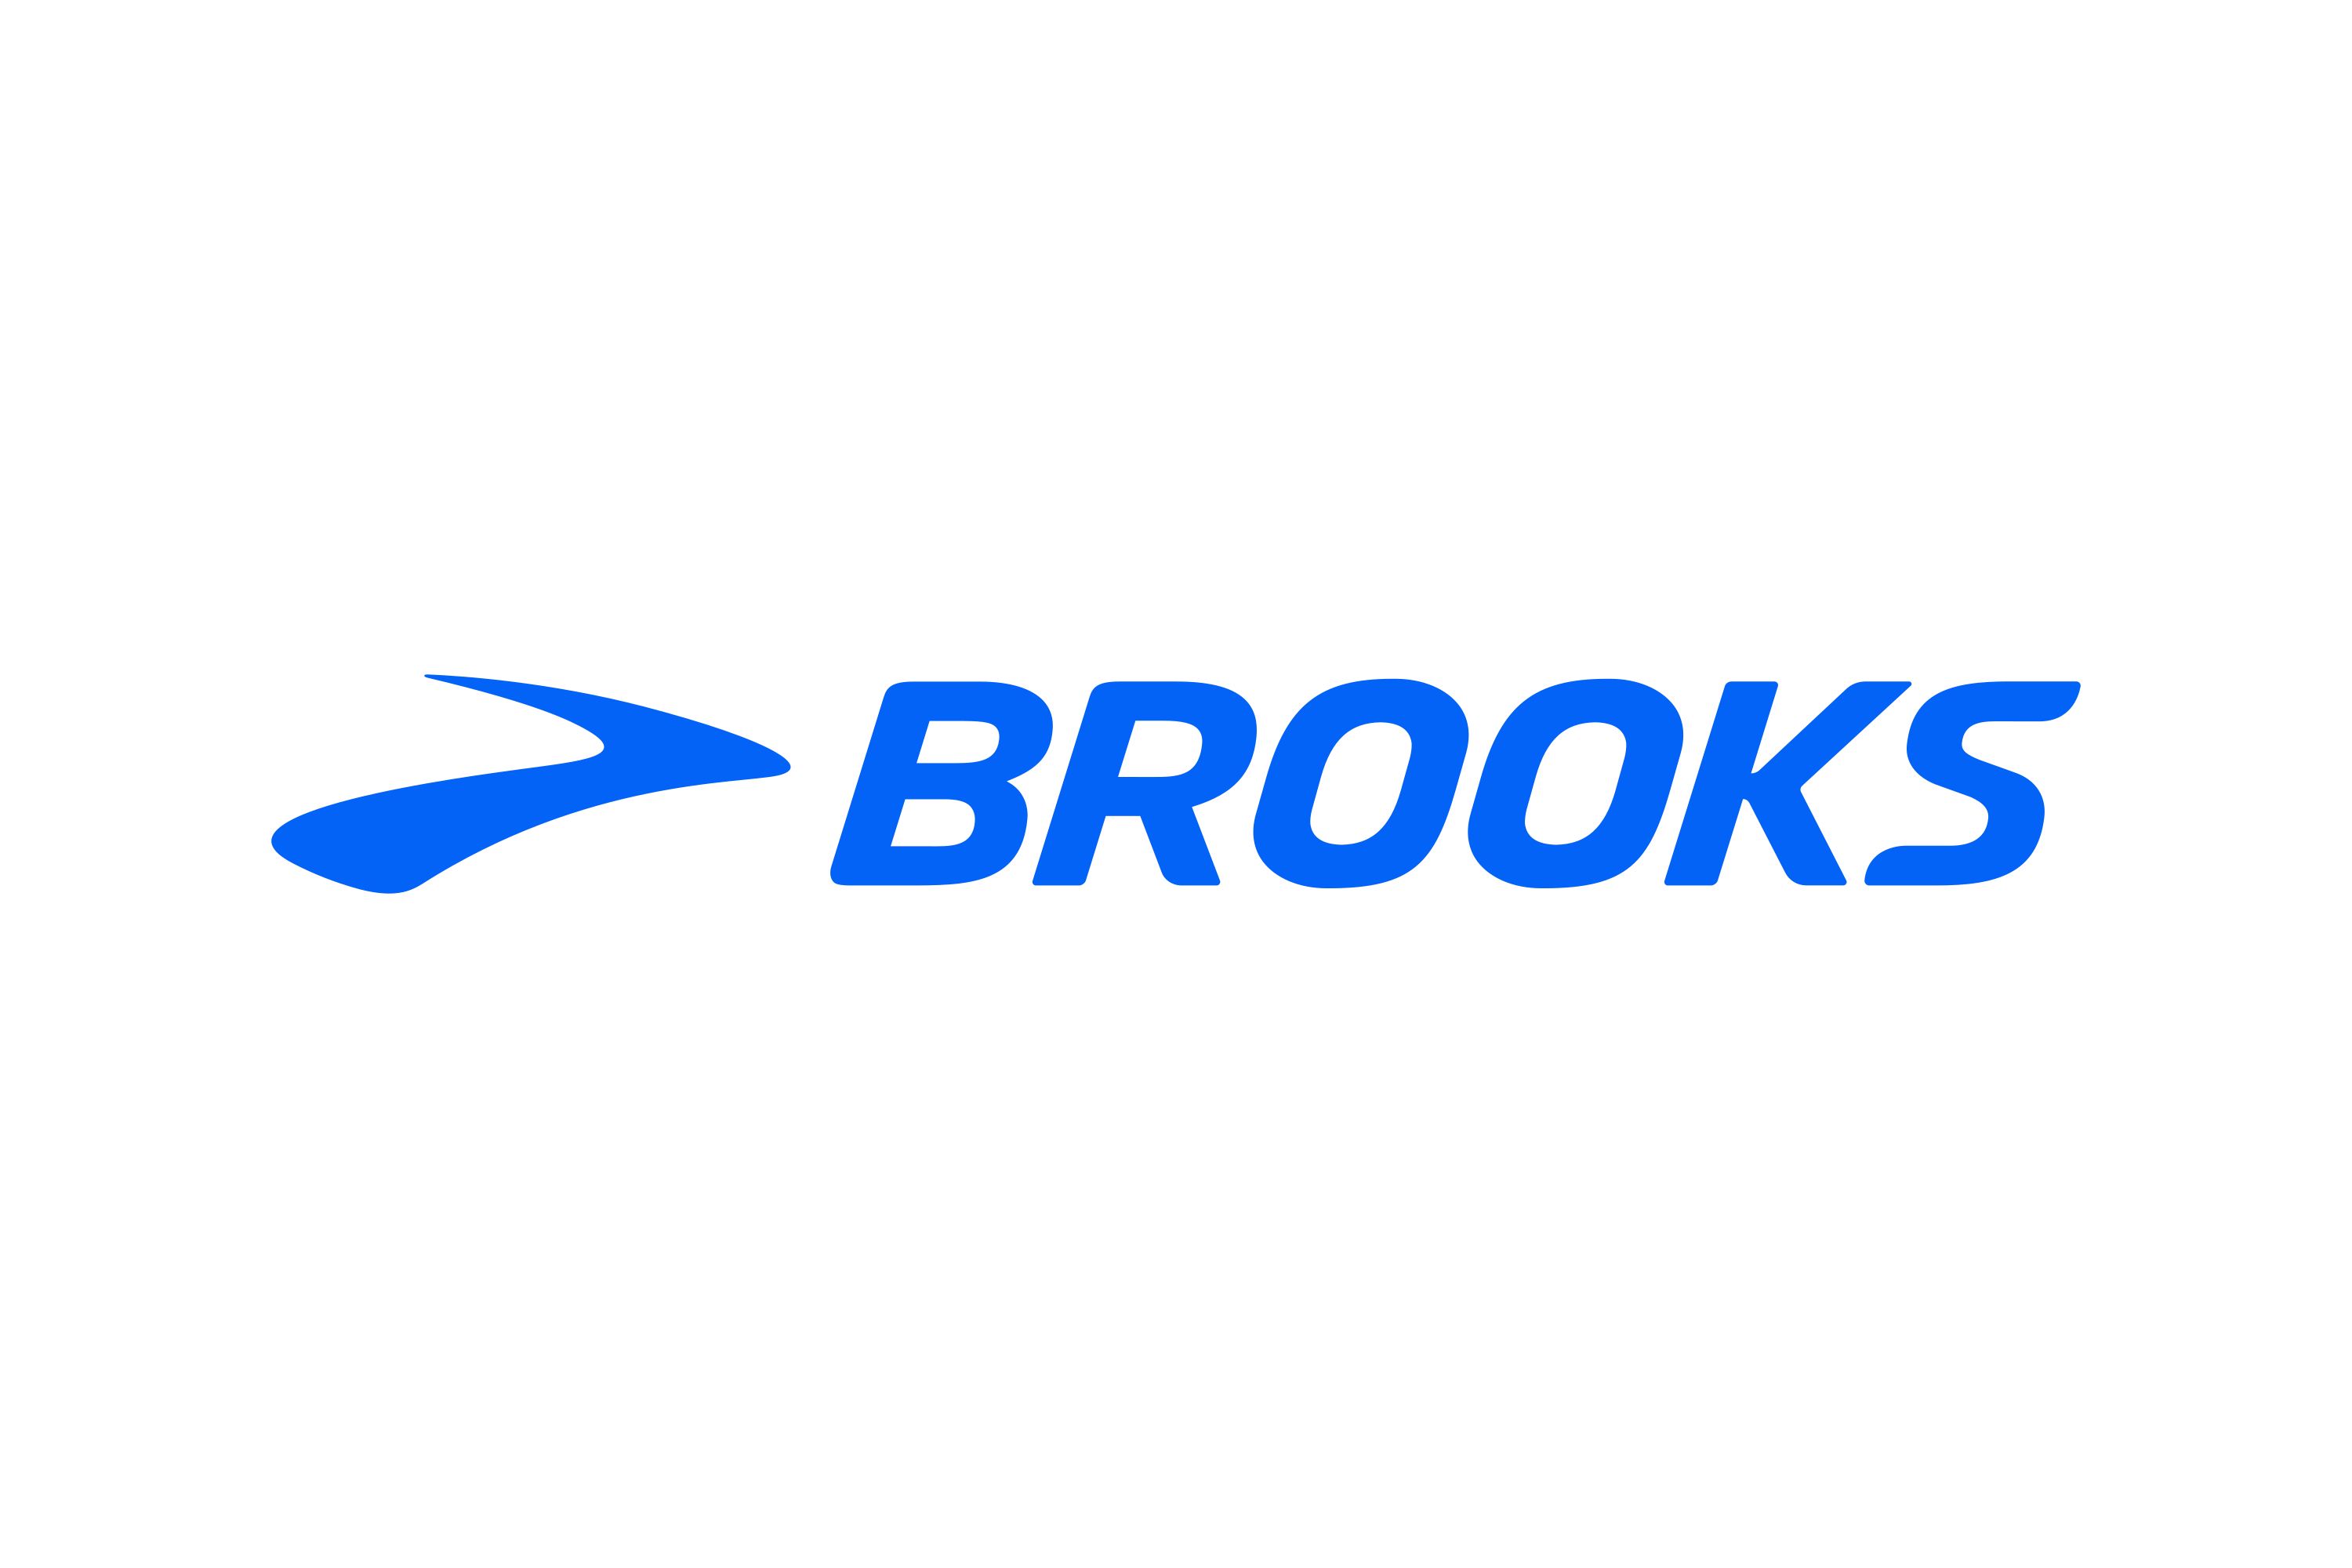 Download Brooks Sports Logo in SVG Vector or PNG File Format - Logo.wine